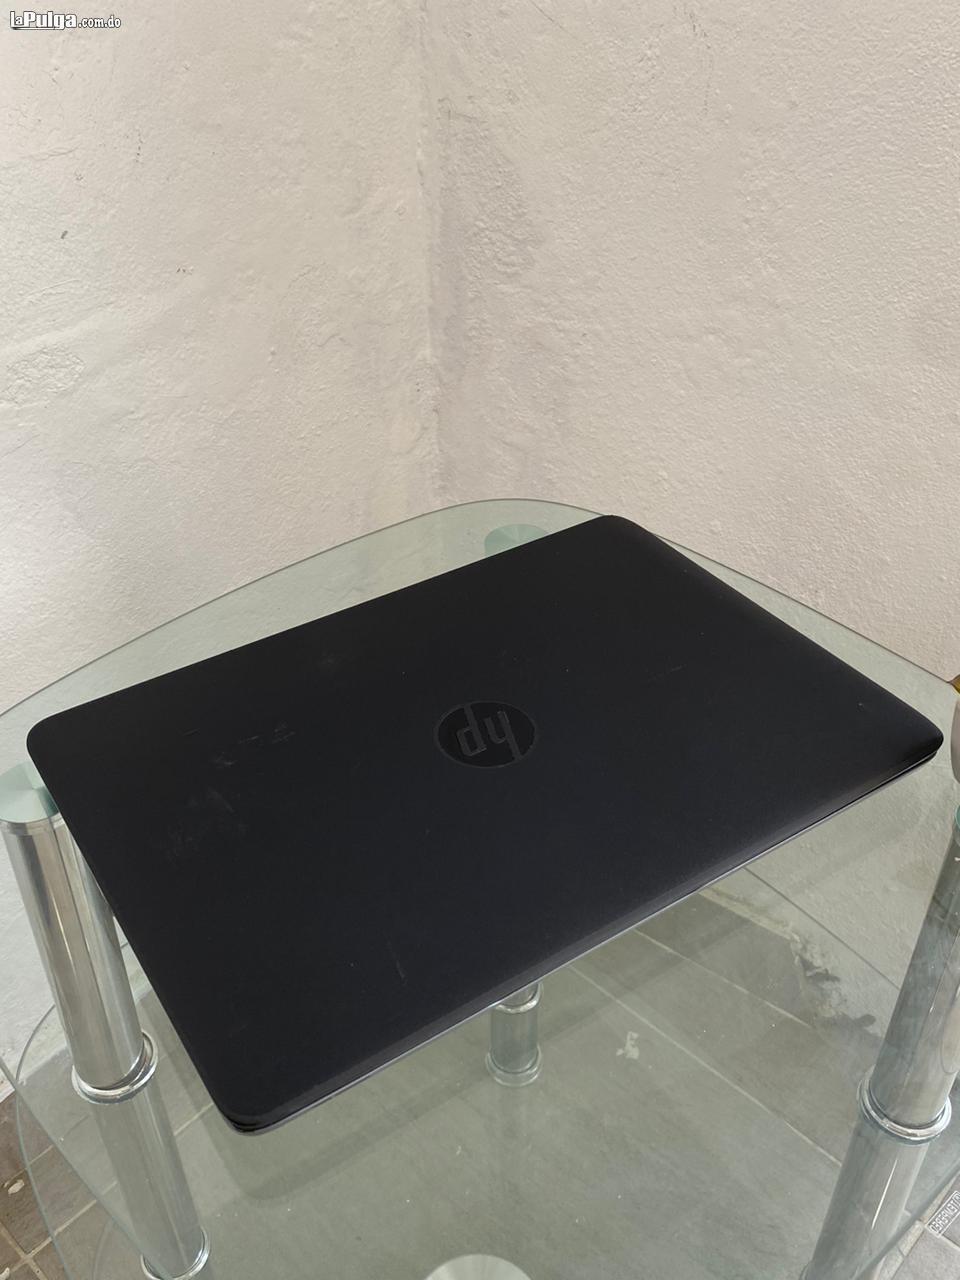 Laptop HP EliteBook 840 G2 - i5 5ta Generación- 4GB RAM - 500GB    Foto 7152095-2.jpg